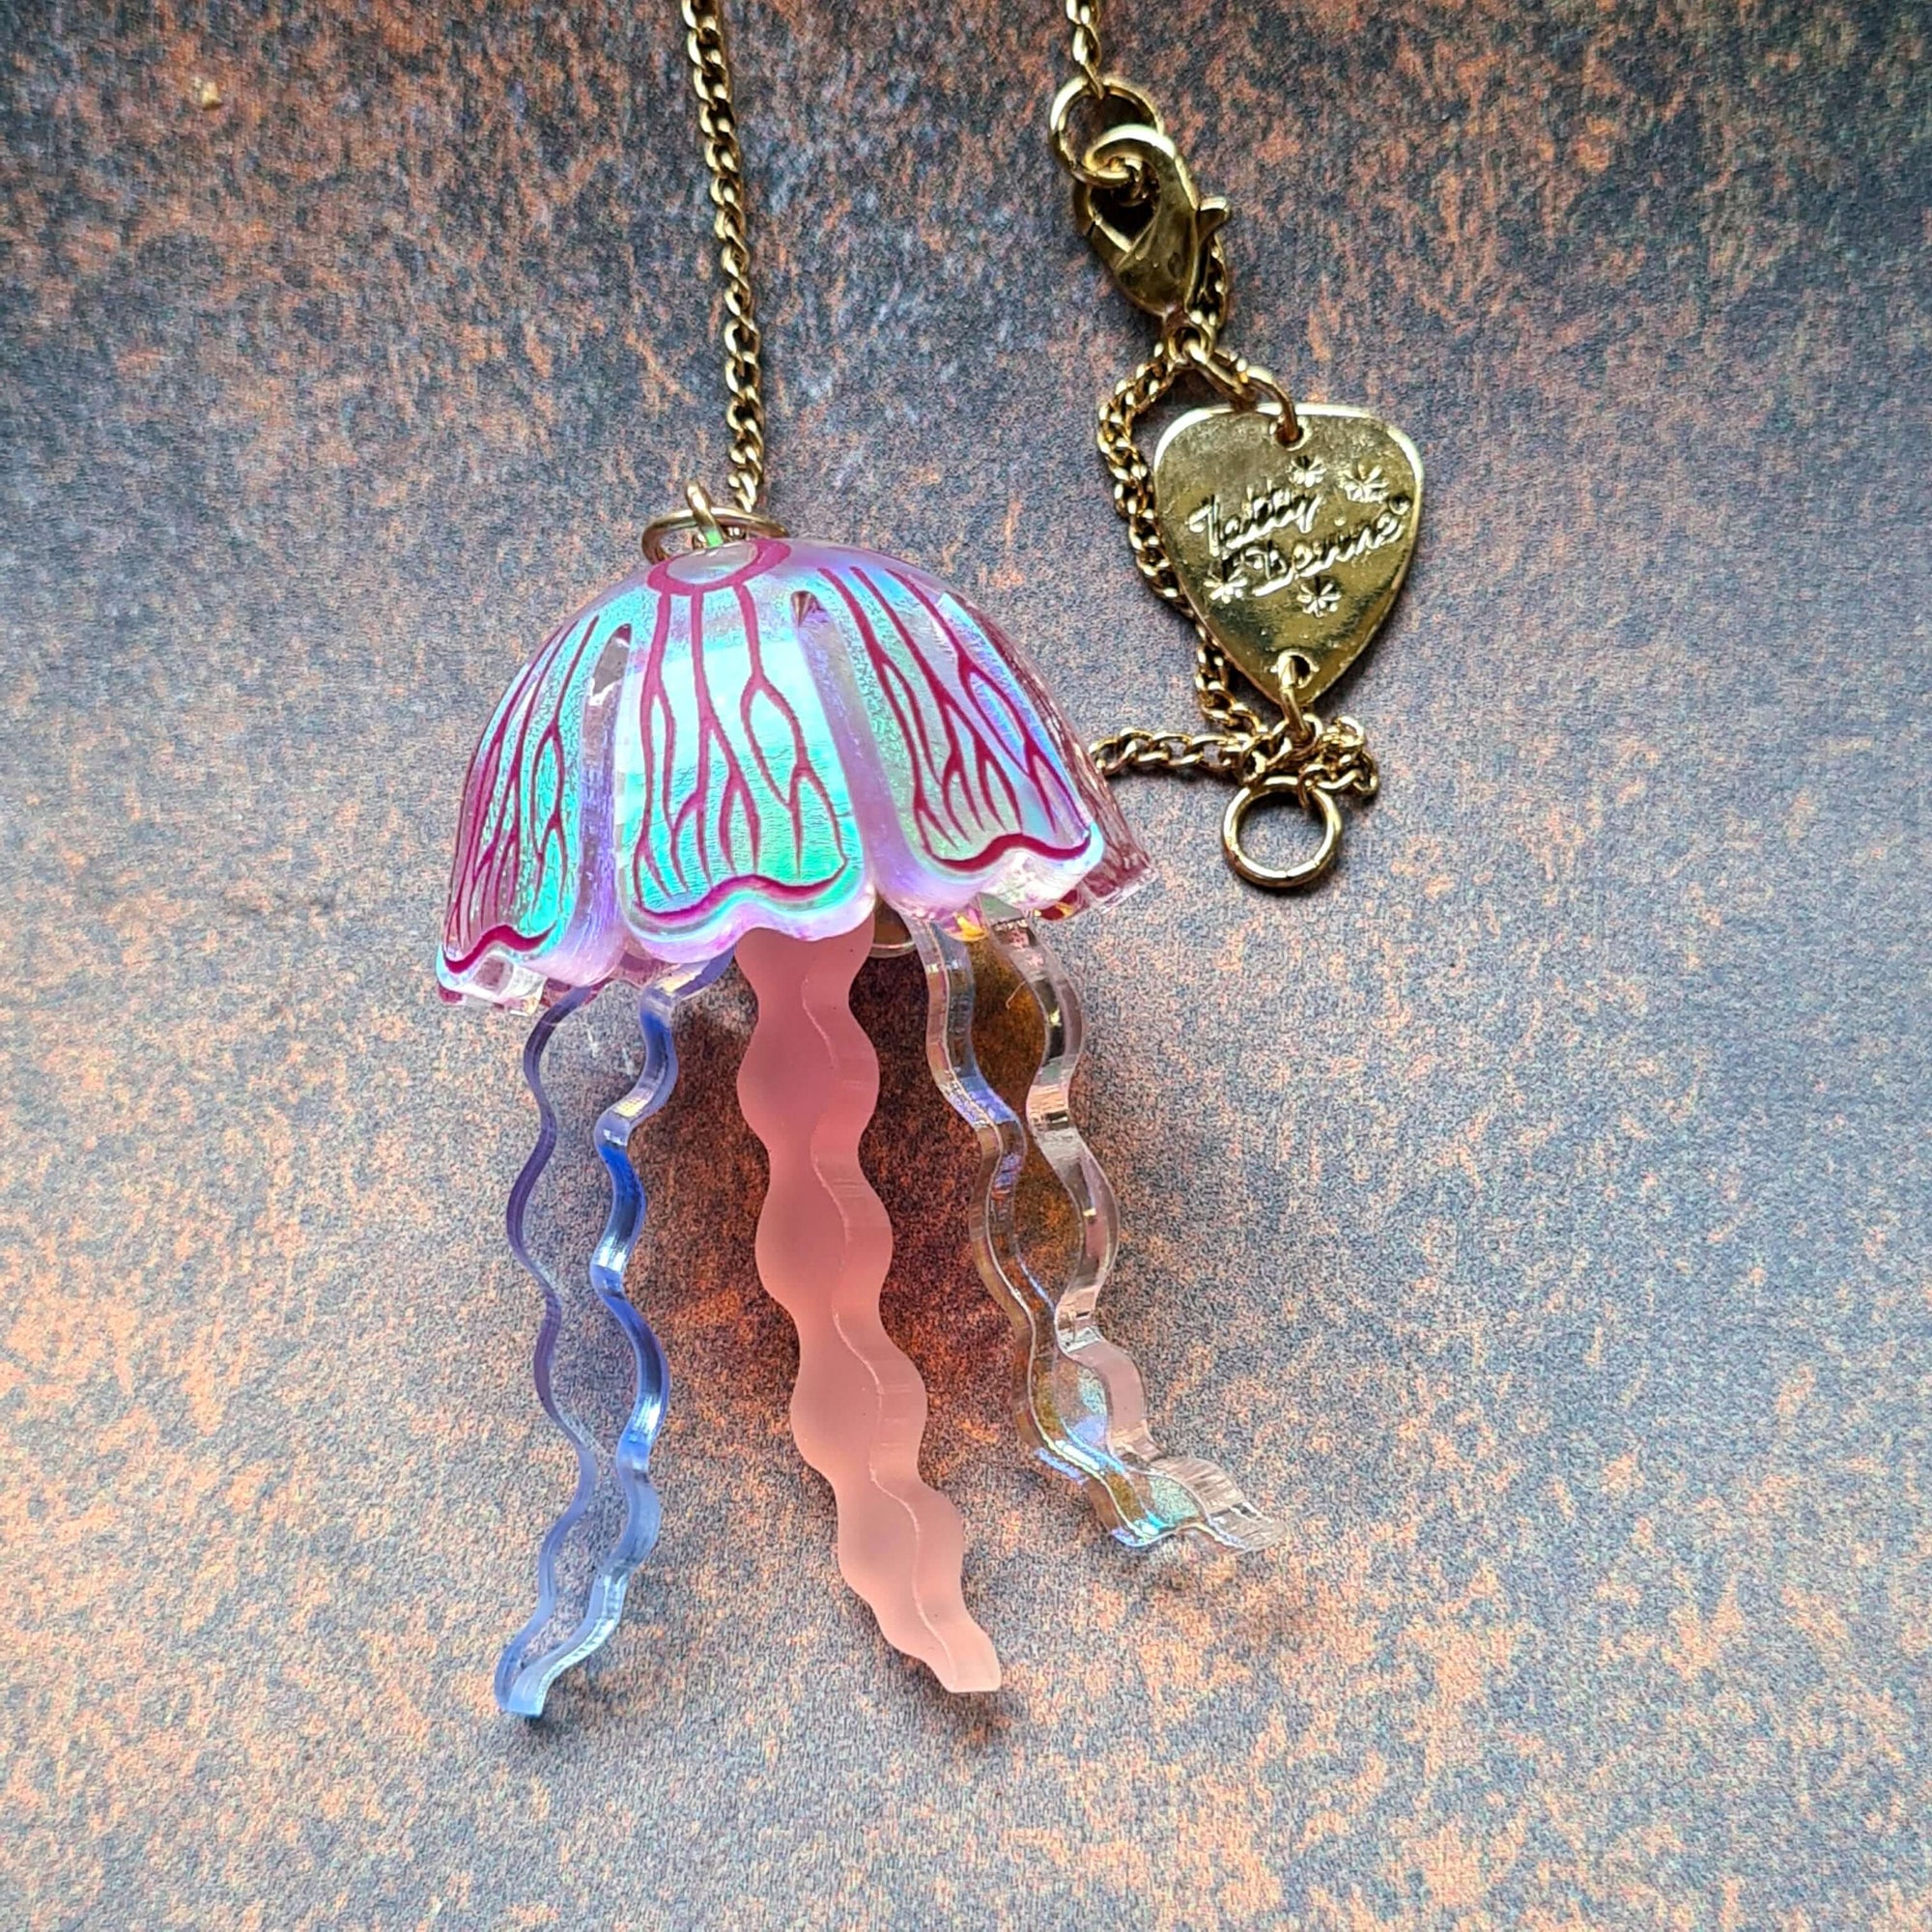 Moon Jellyfish Pendant by Tatty Devine